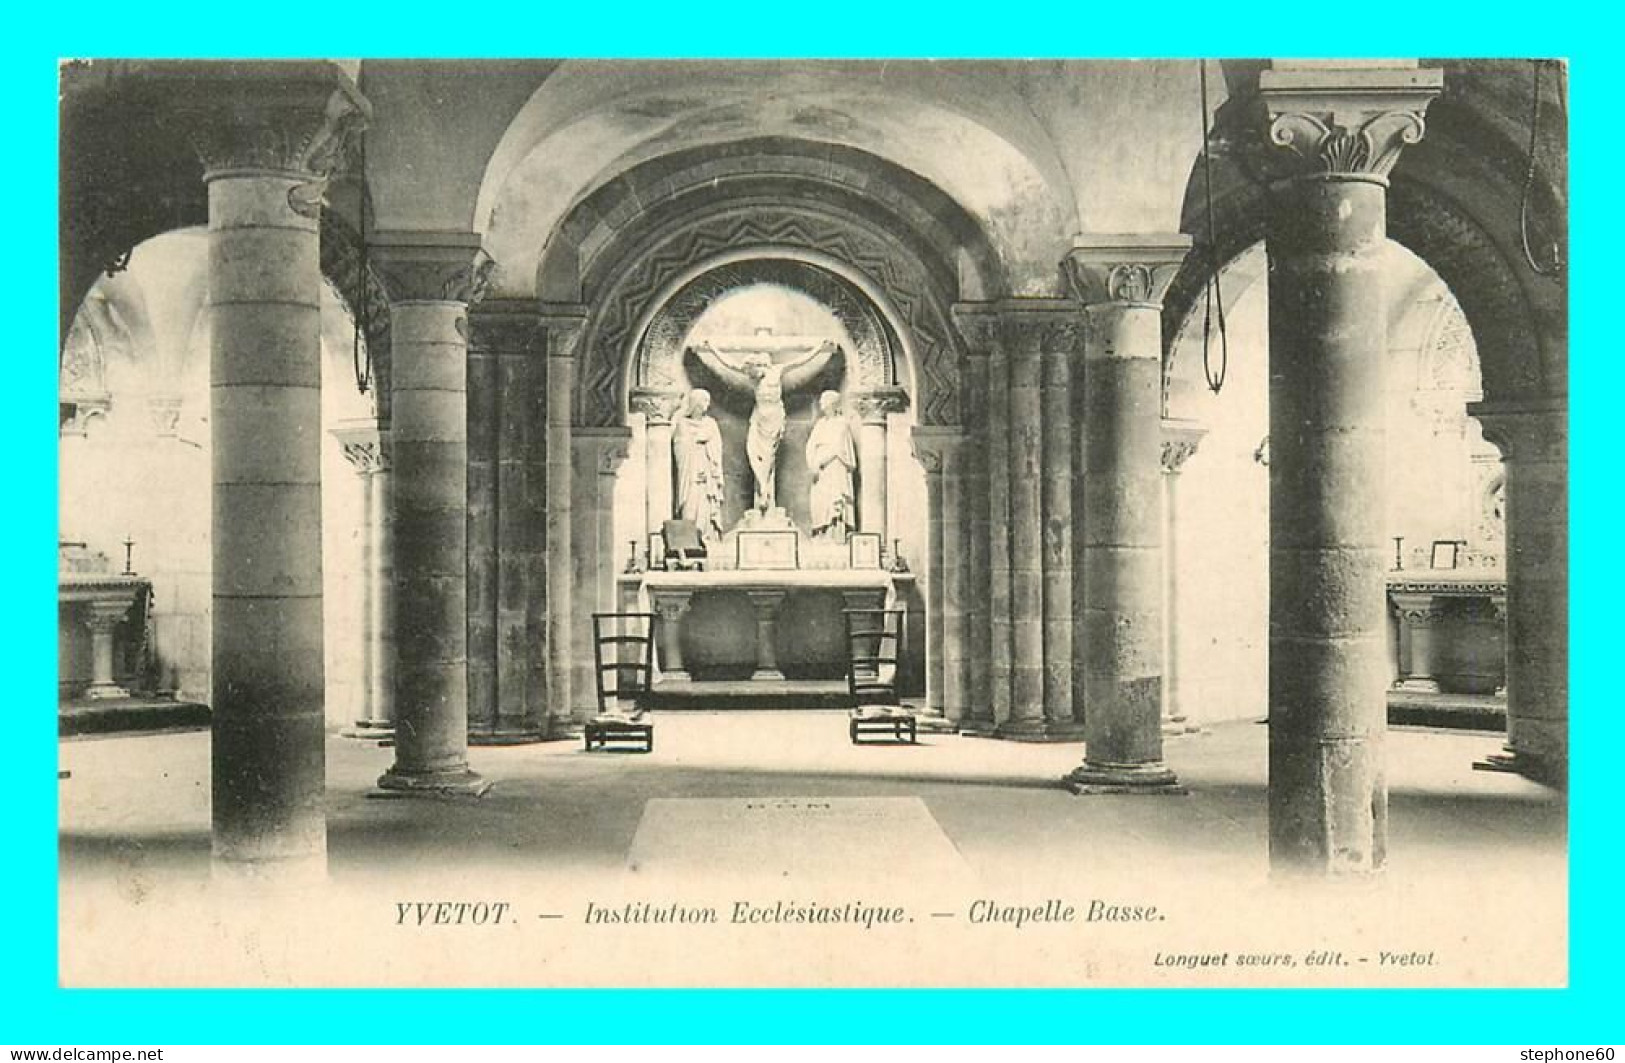 A851 / 539 76 - YVETOT Institution Ecclésiastique Chapelle Basse - Yvetot